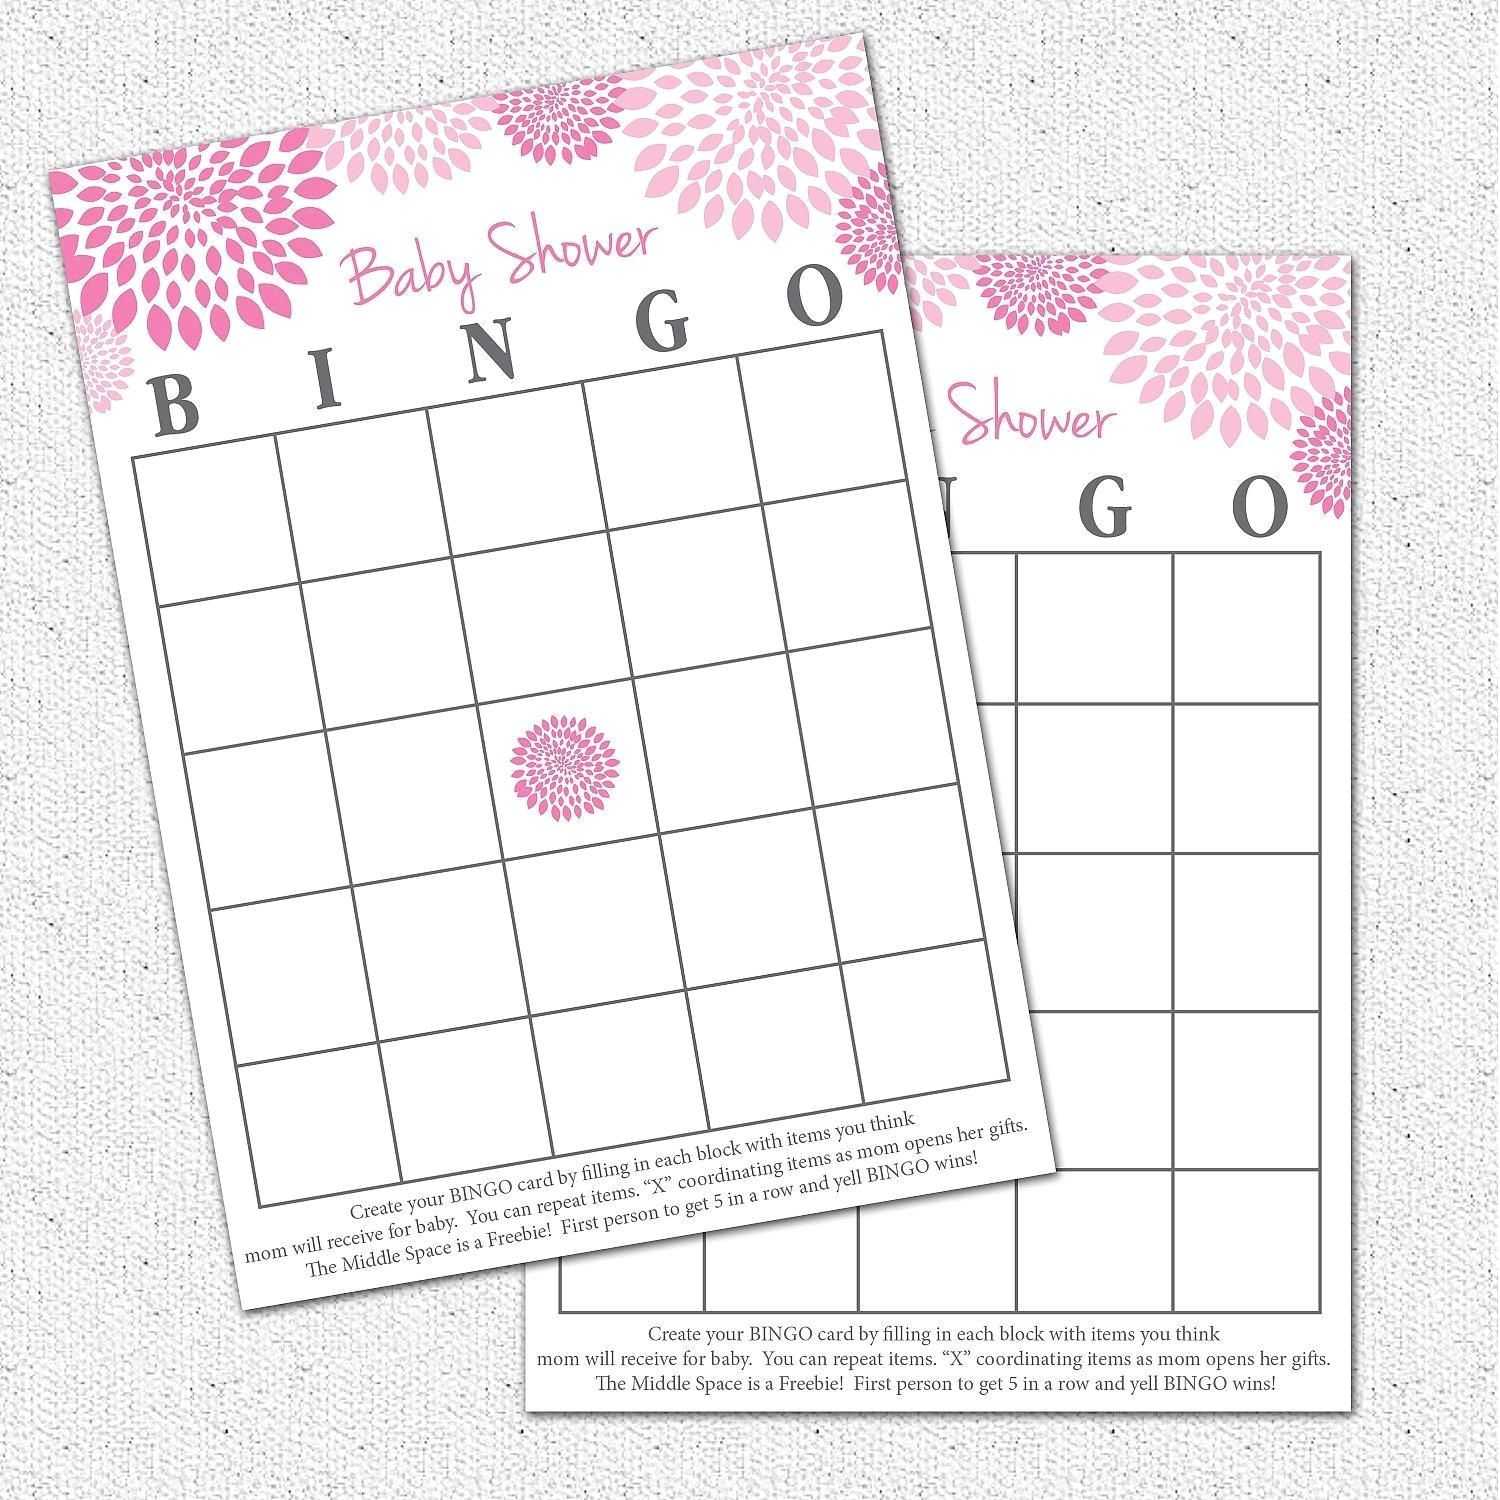 Blank Bingo Card Template Microsoft Word – Plancha Inside Blank Bingo Card Template Microsoft Word